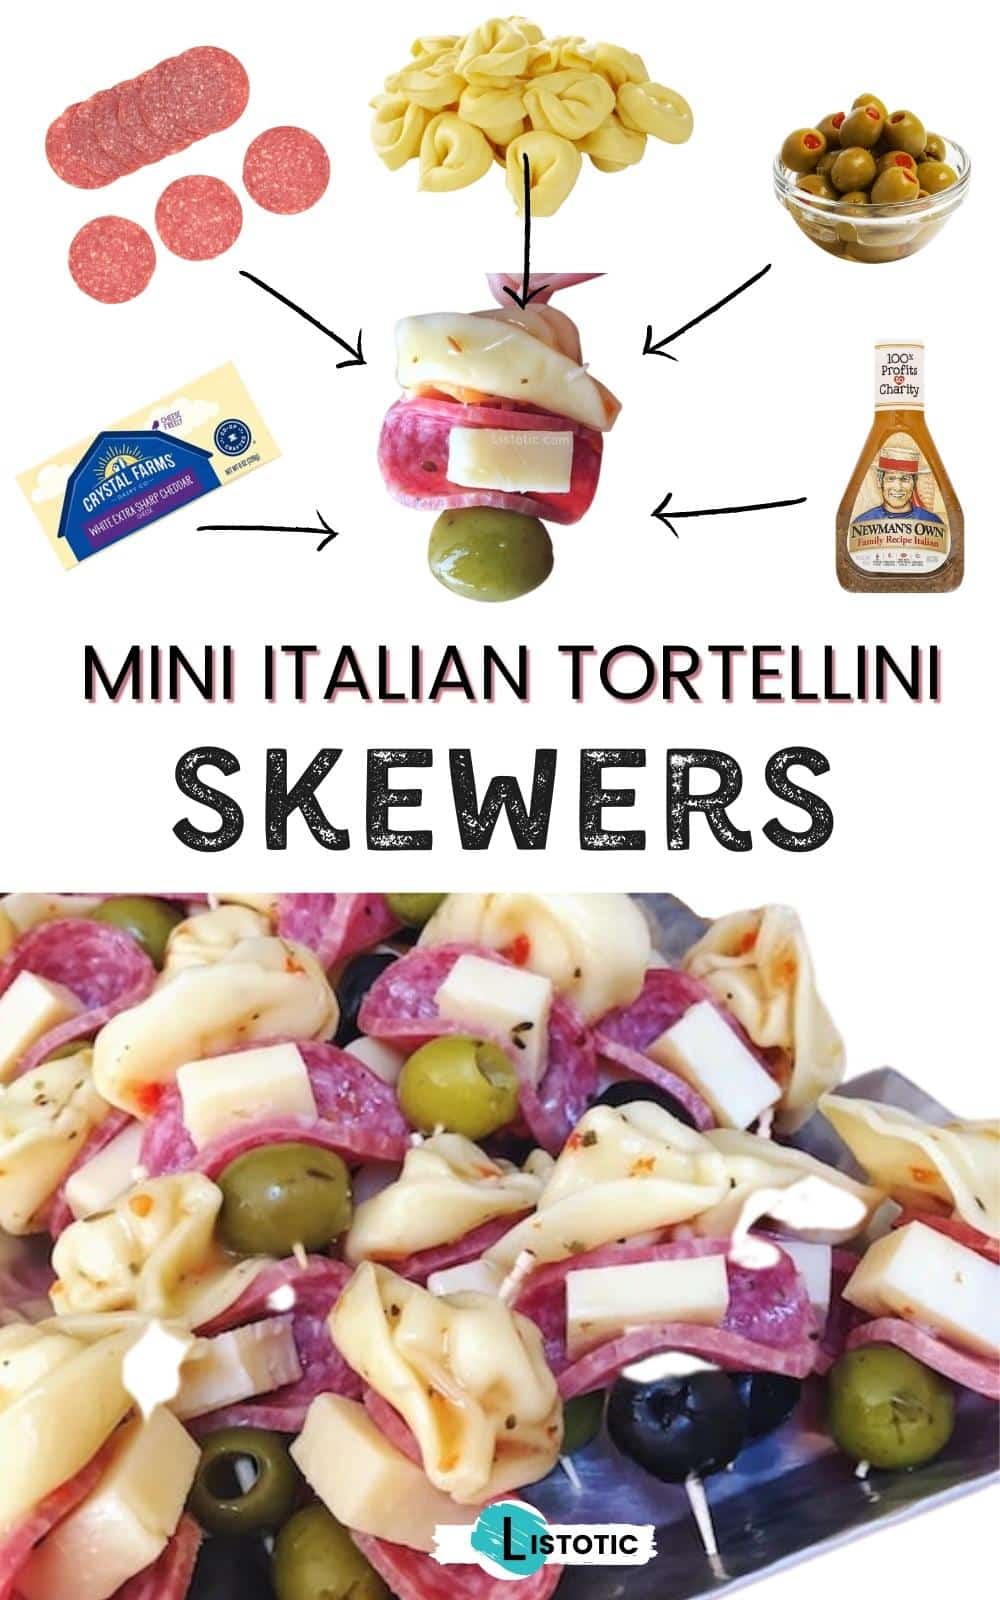 Mini Italian Skewers with olives, cheese, tortellini, salami and italian dressing